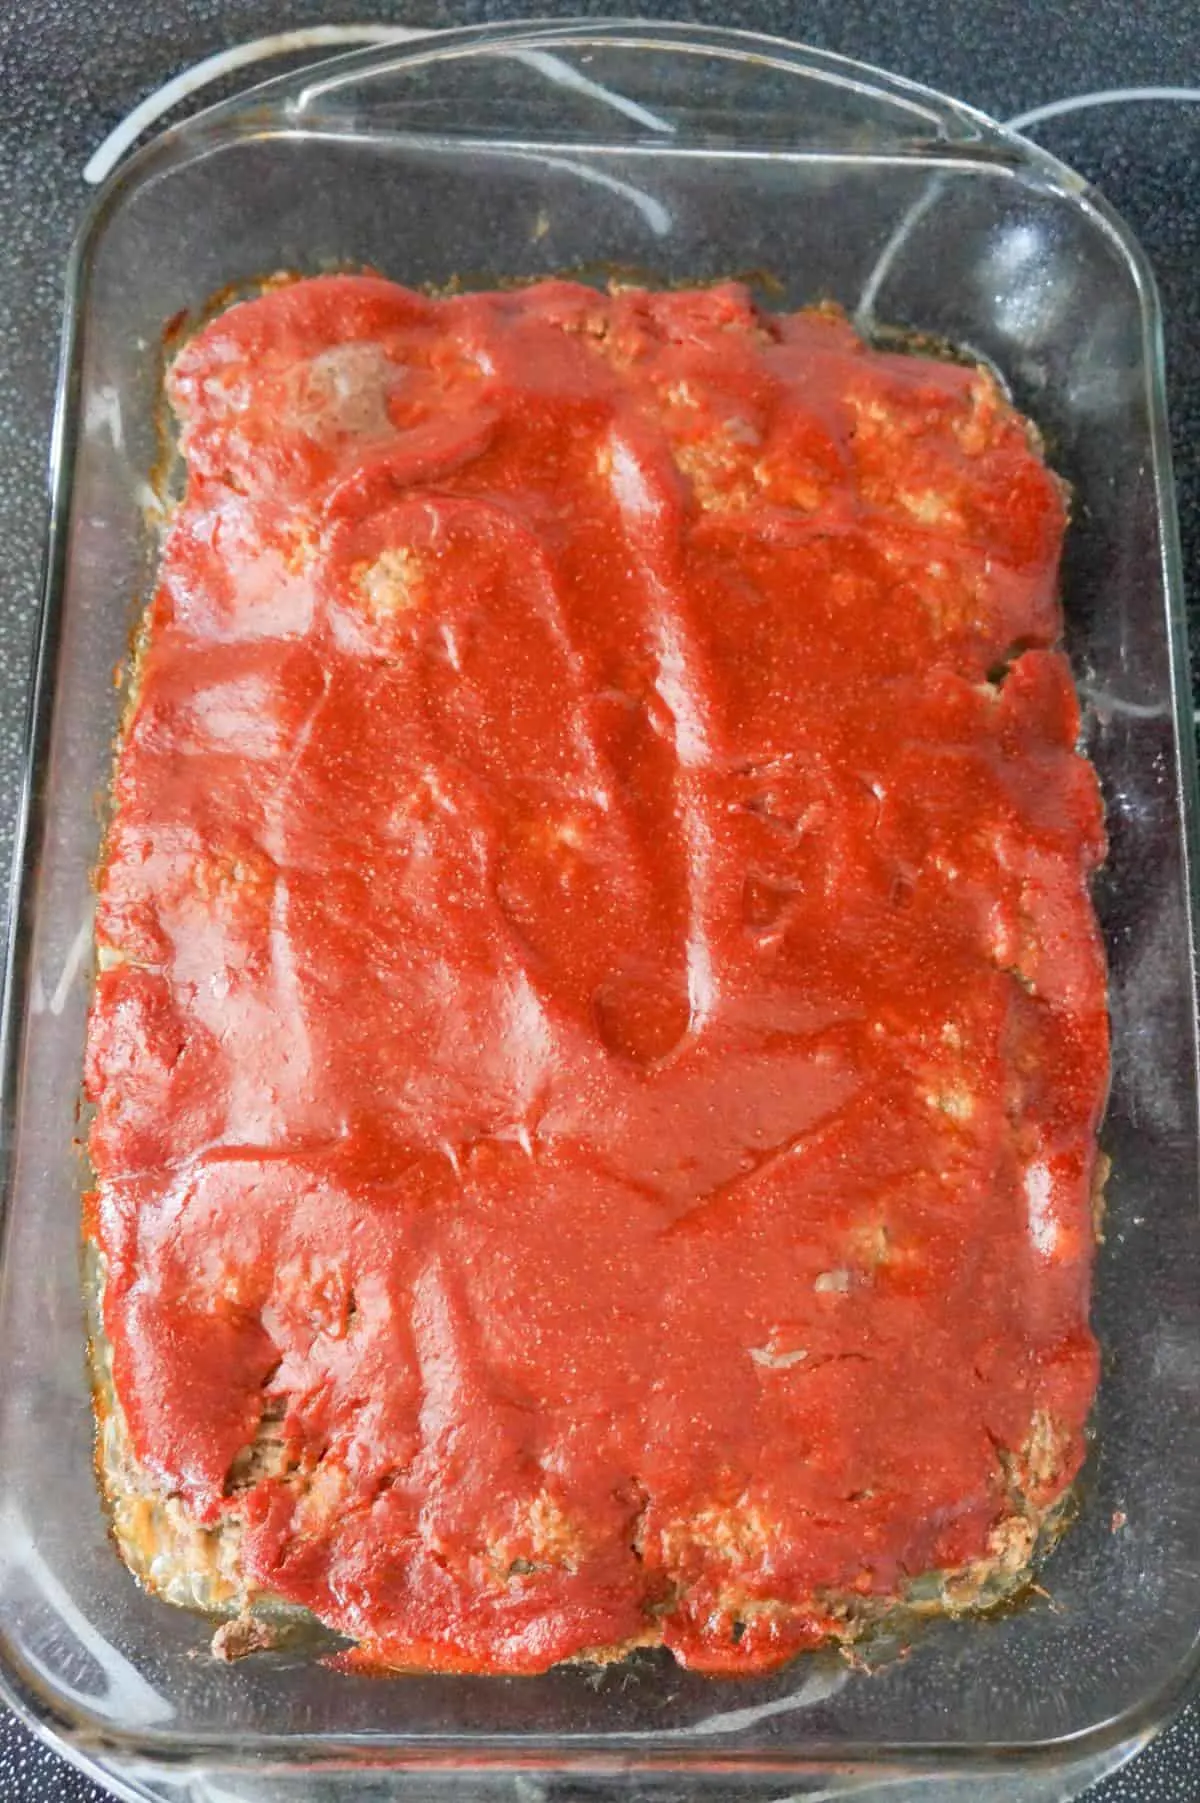 meatloaf casserole with ketchup glaze after baking